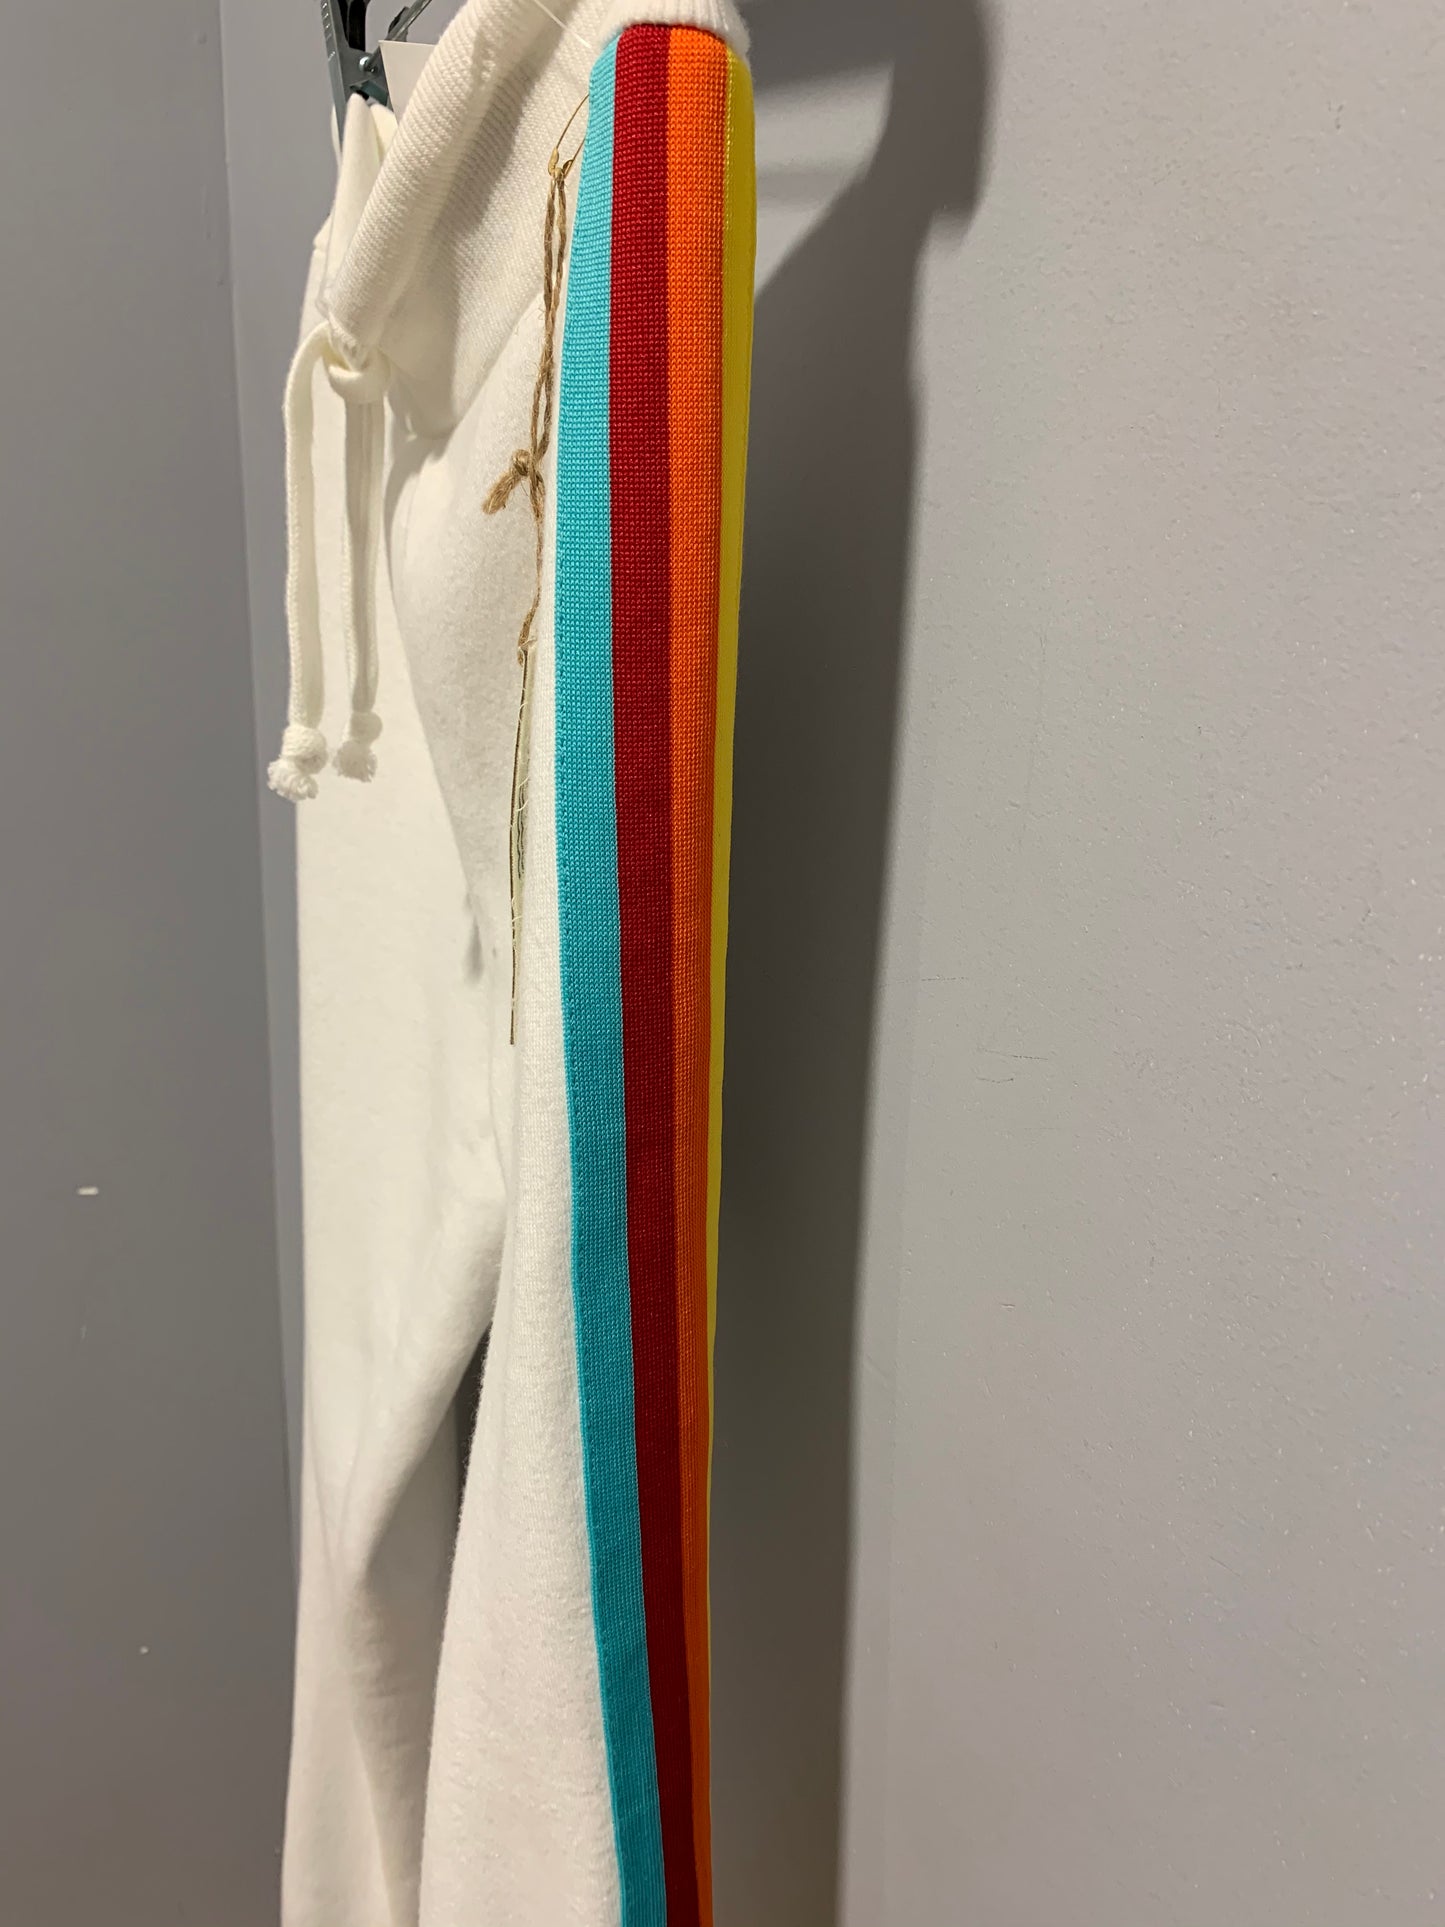 Rainbow Stripe Sweatpants